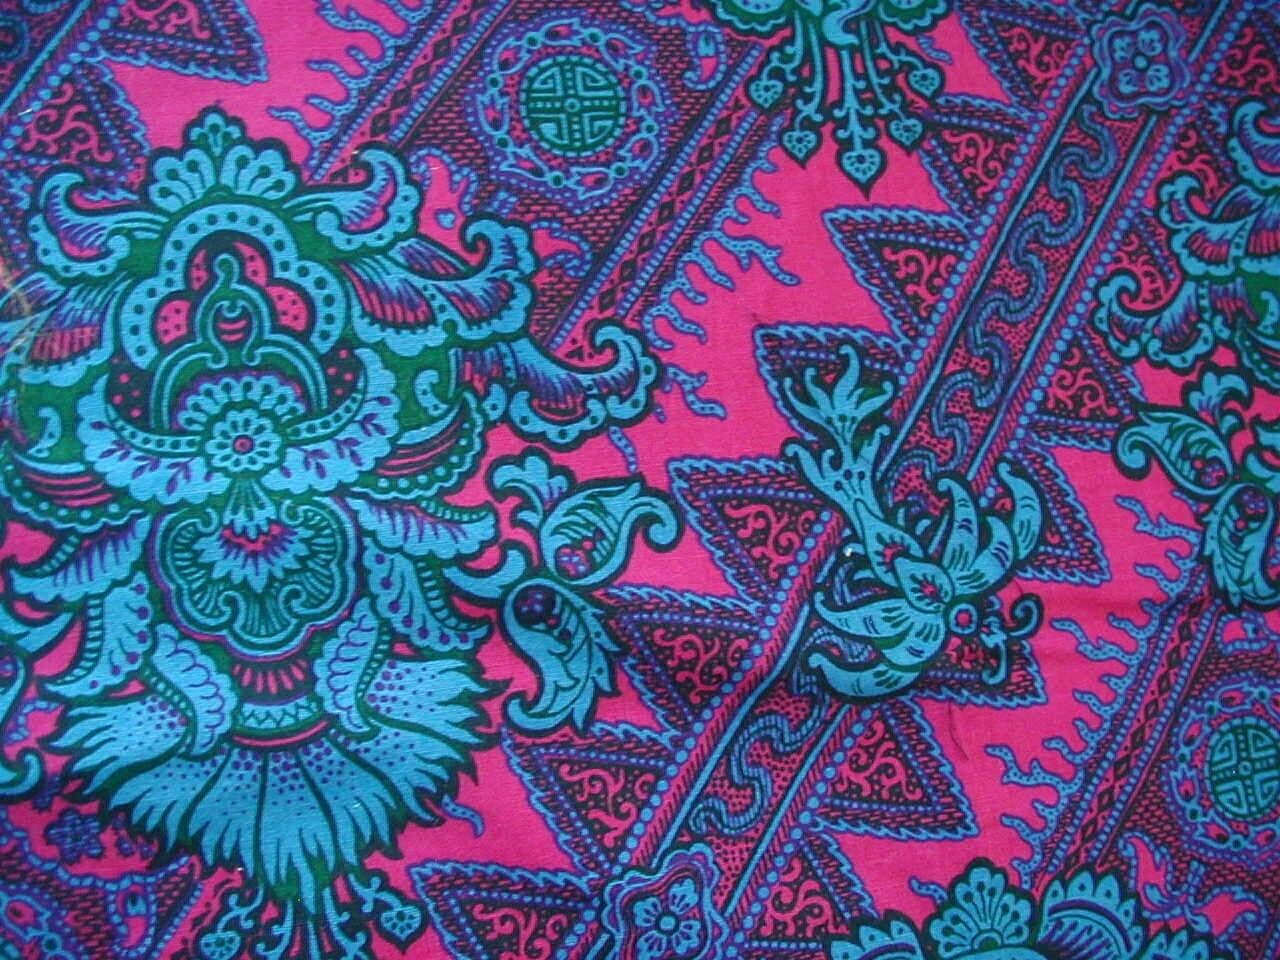 2. 8 total yards vintage upholstery fabric remnants Cohama Zanzibar